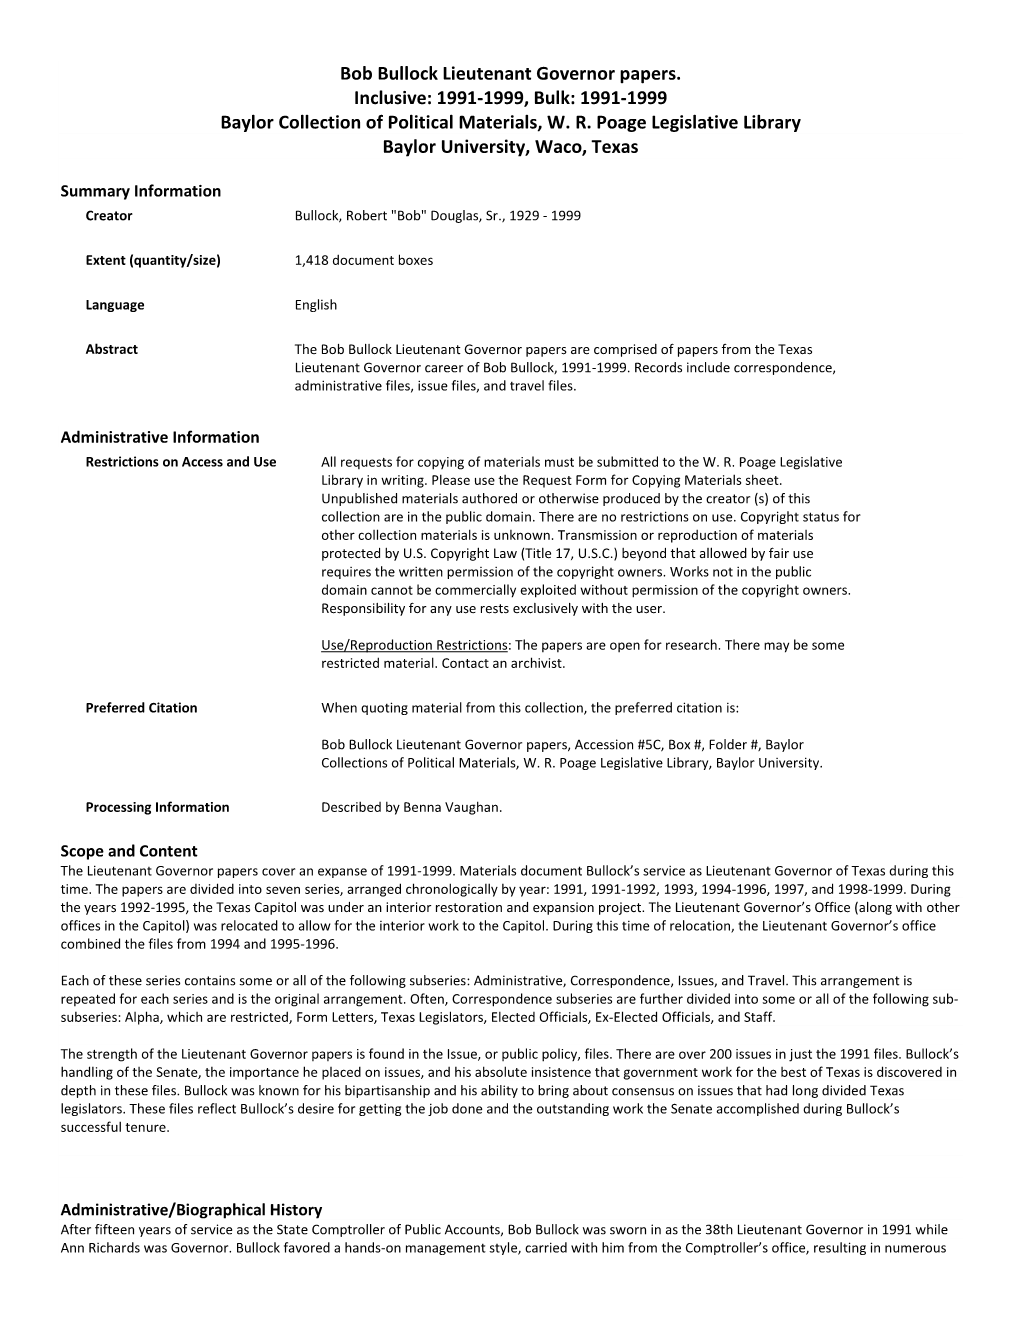 Bullock Lt. Gov. PDF Version Without Alpha Correspondence